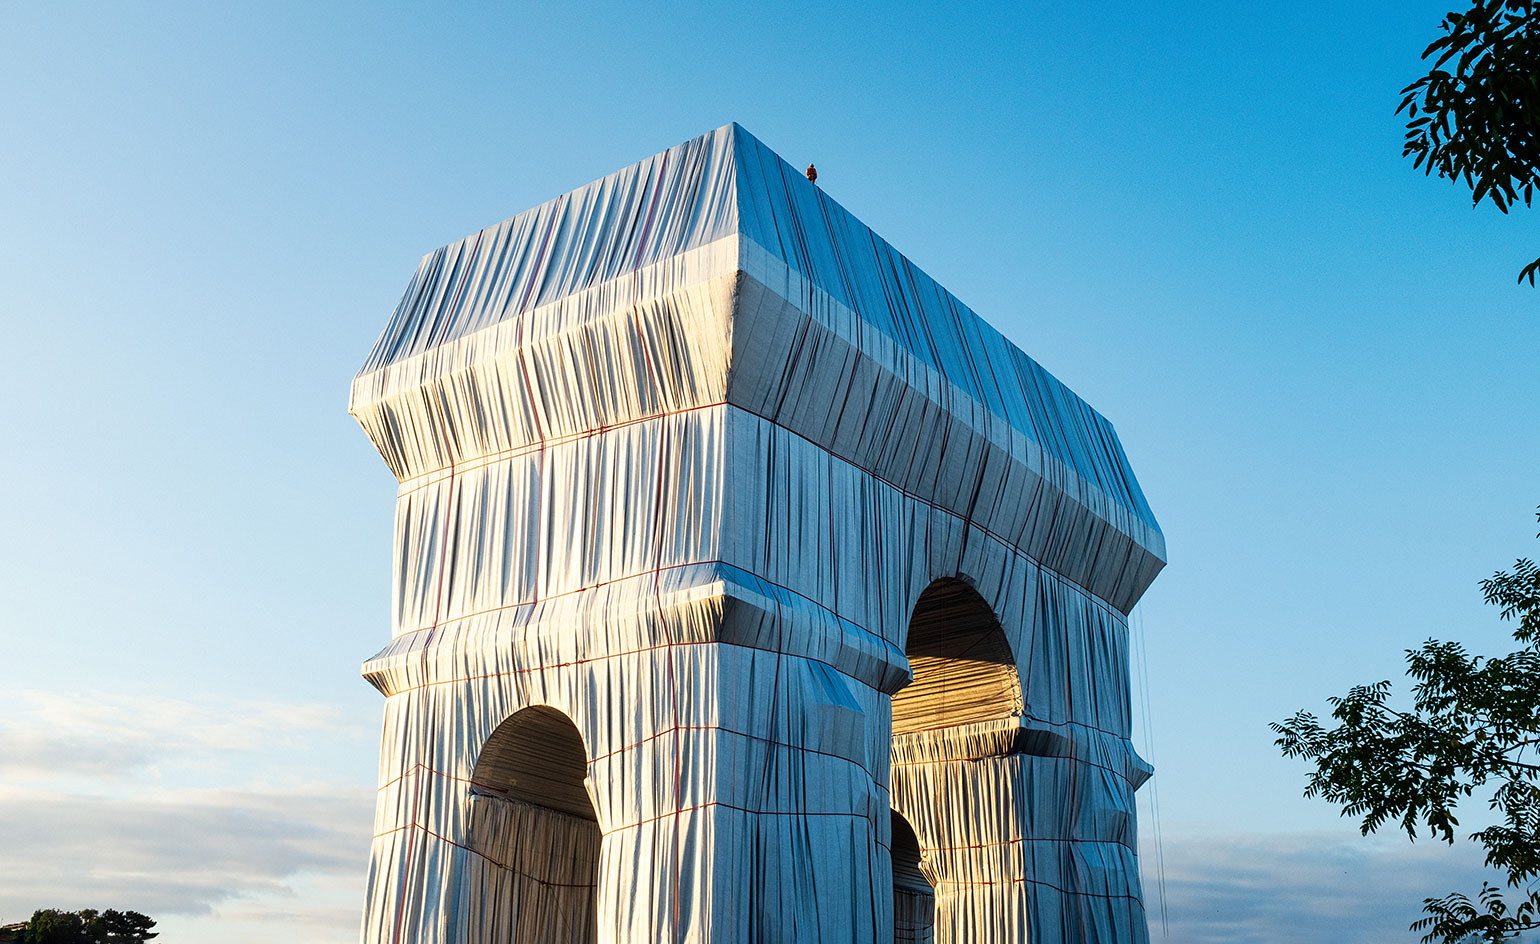 Christo's final work revealed: L'Arc de Triomphe, Wrapped